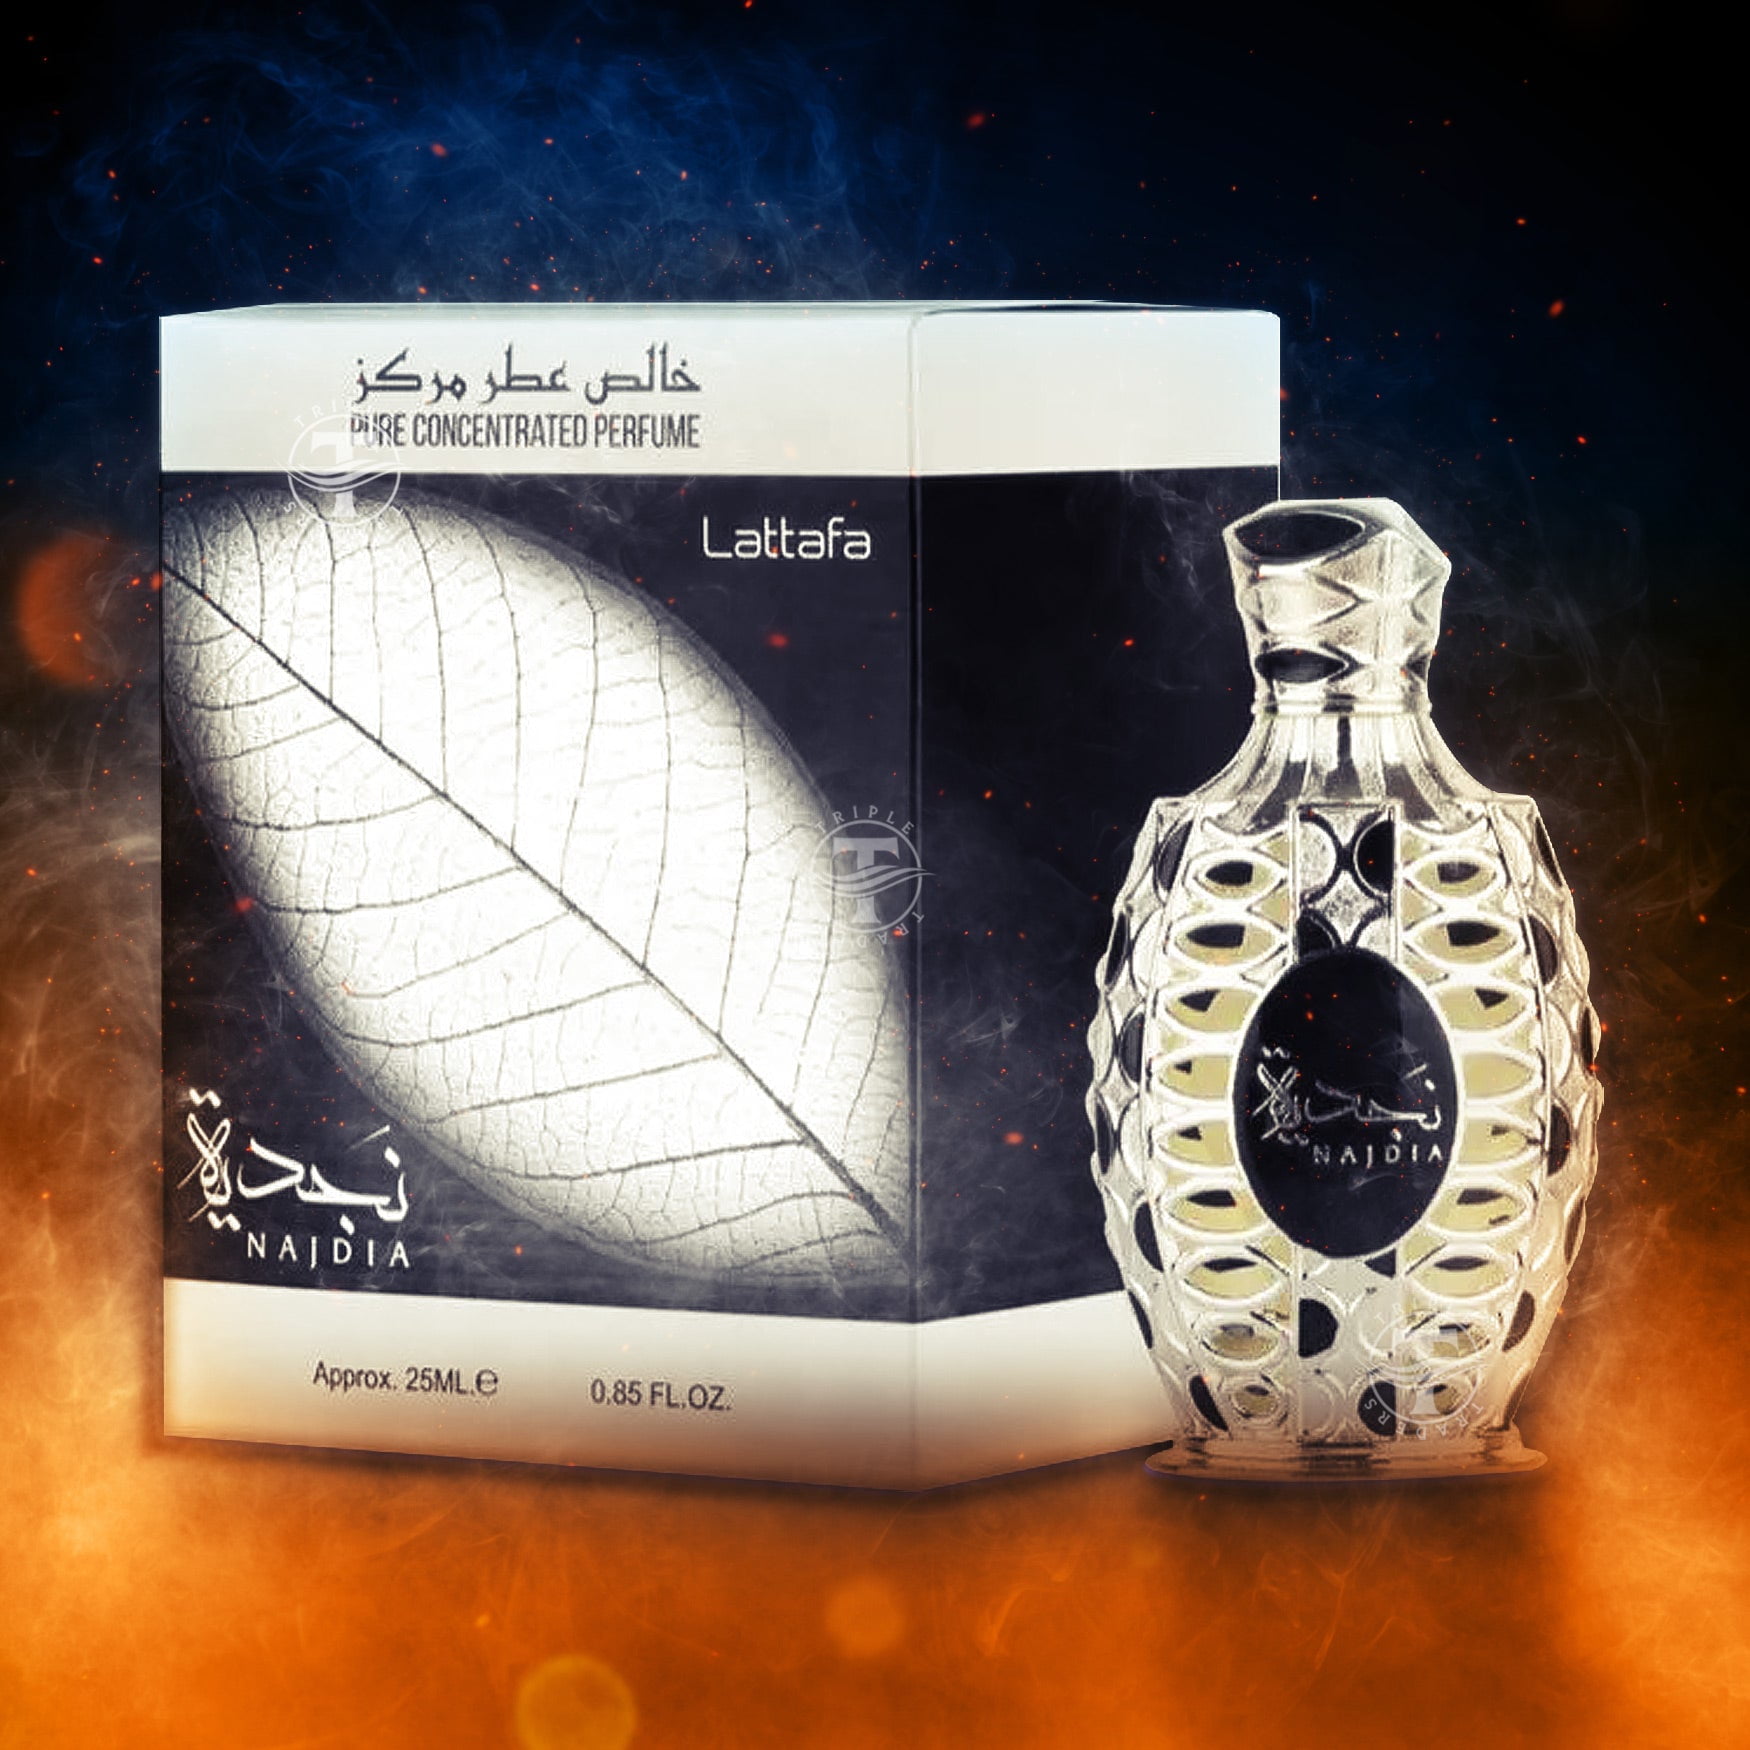 Najdia Pure Concentrated Perfume Oil By Lattafa 25ml 0.85 Oz 